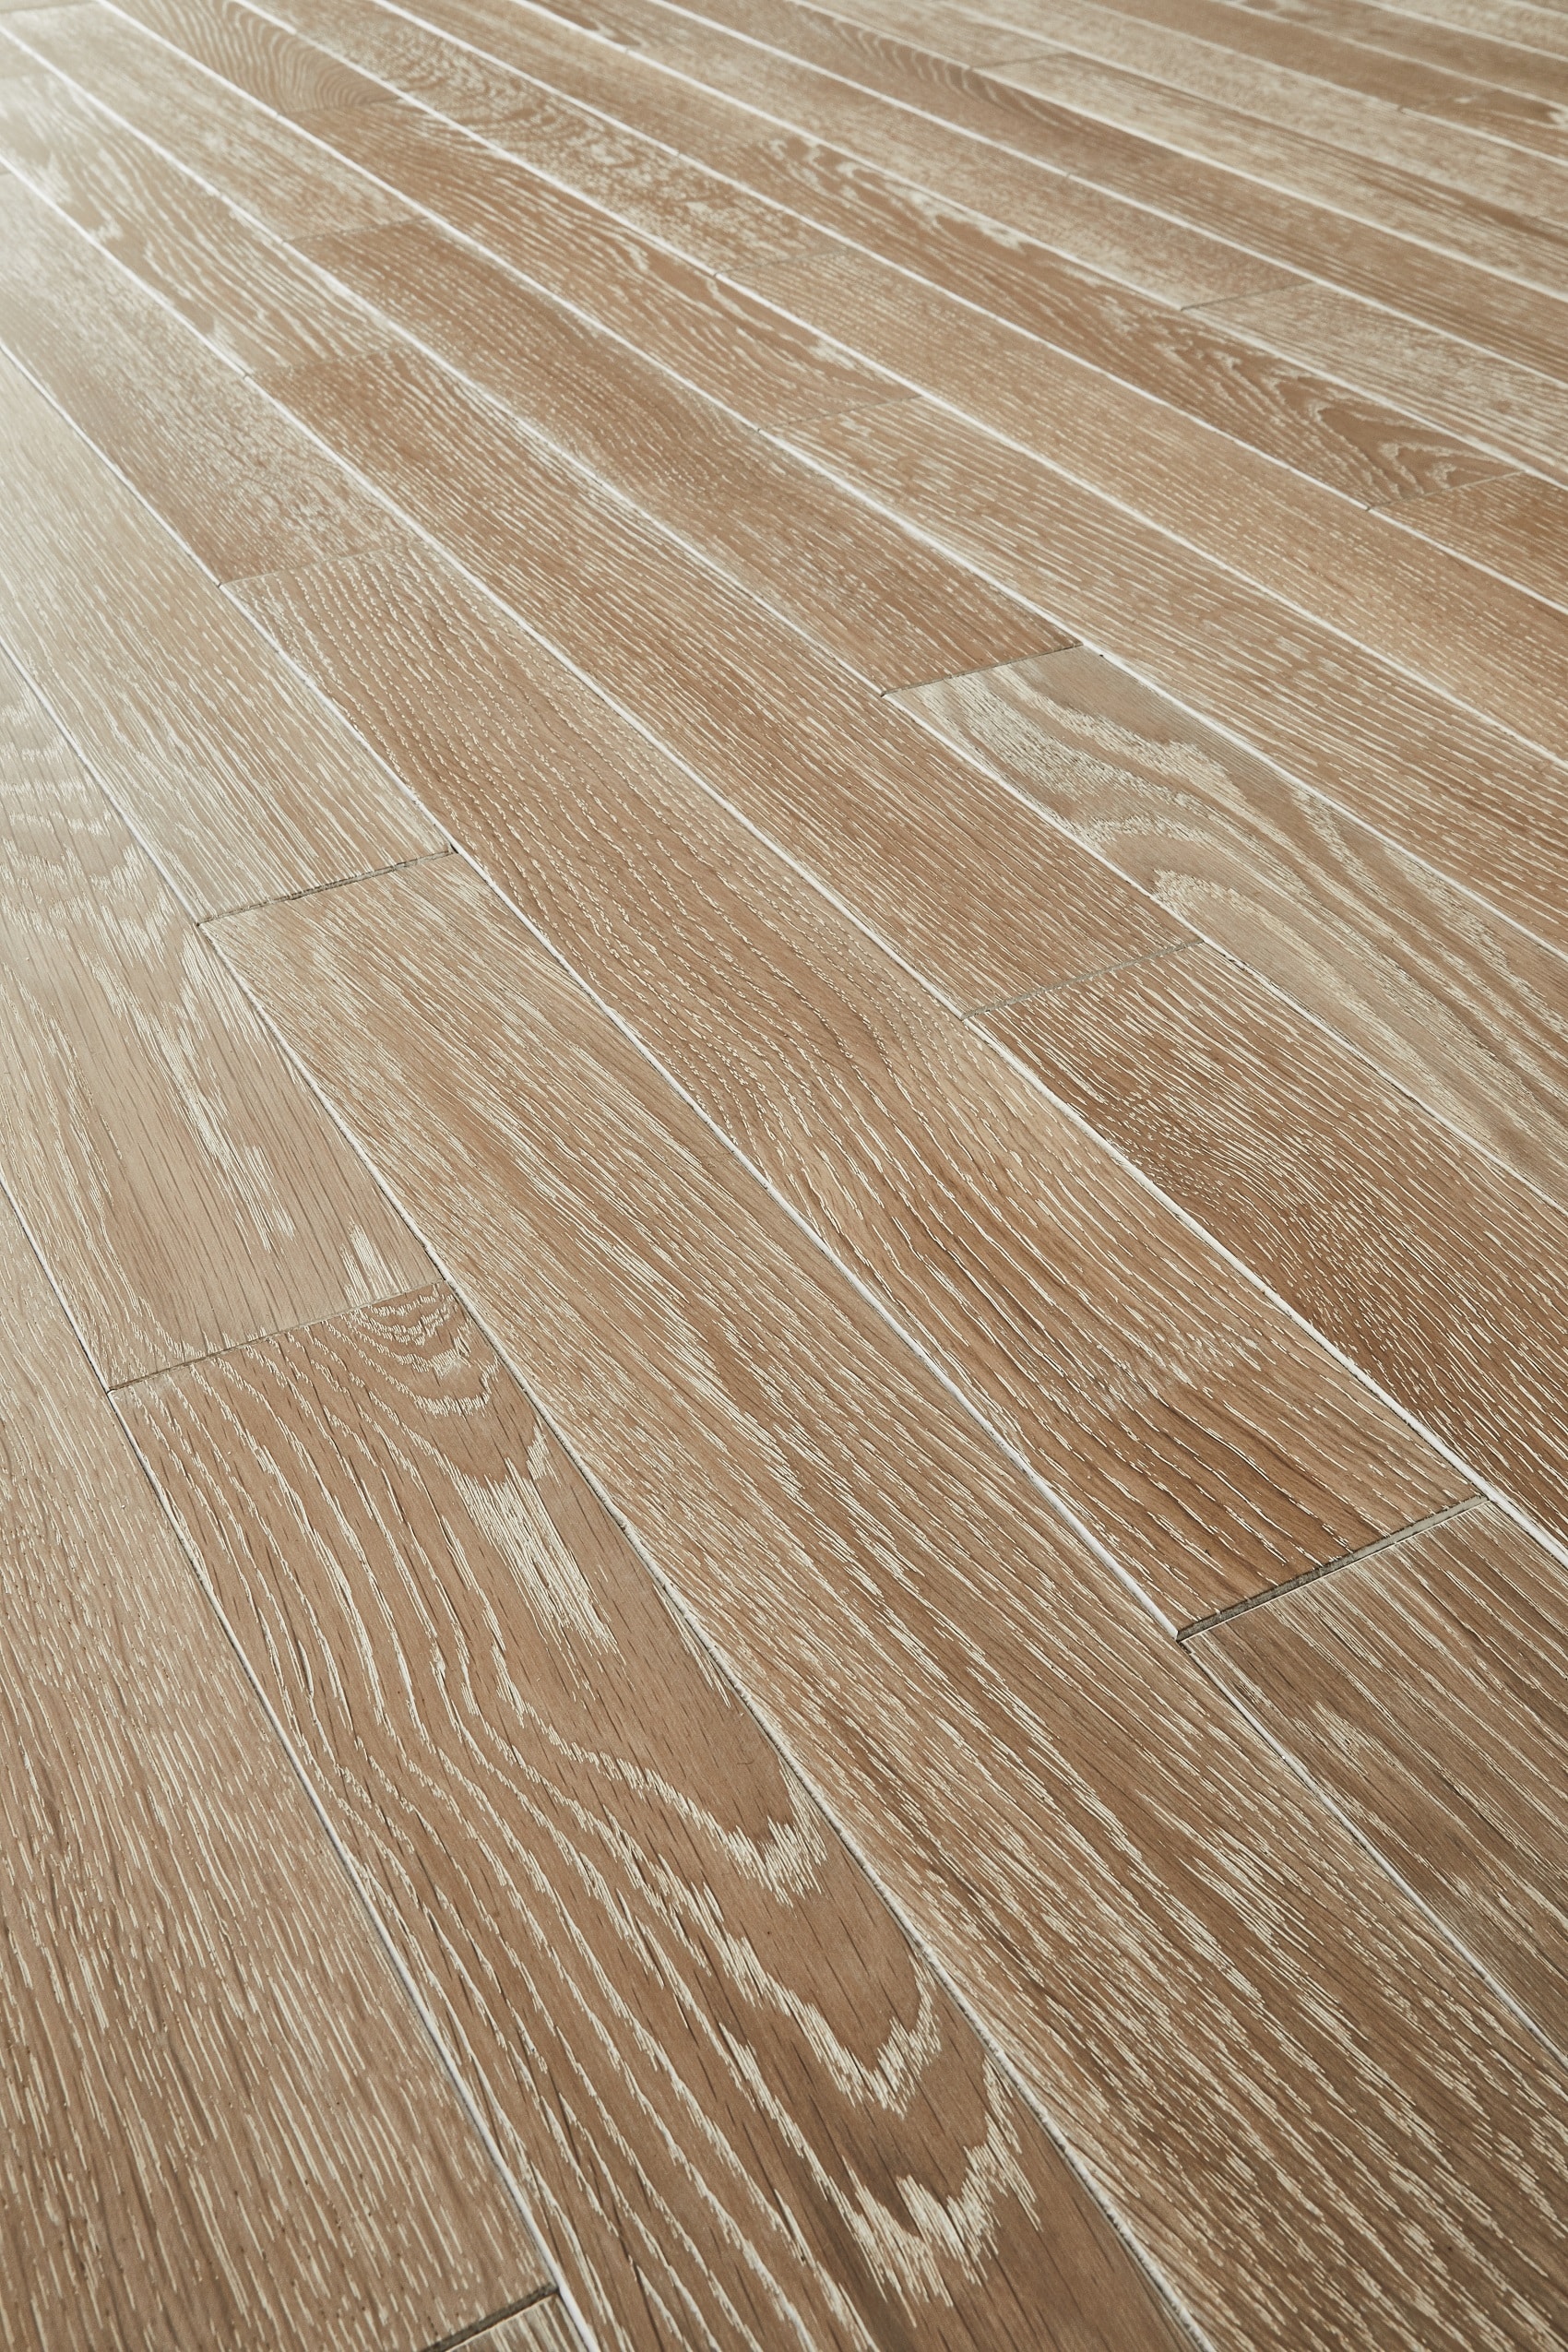 Wooden-laminate-flooring